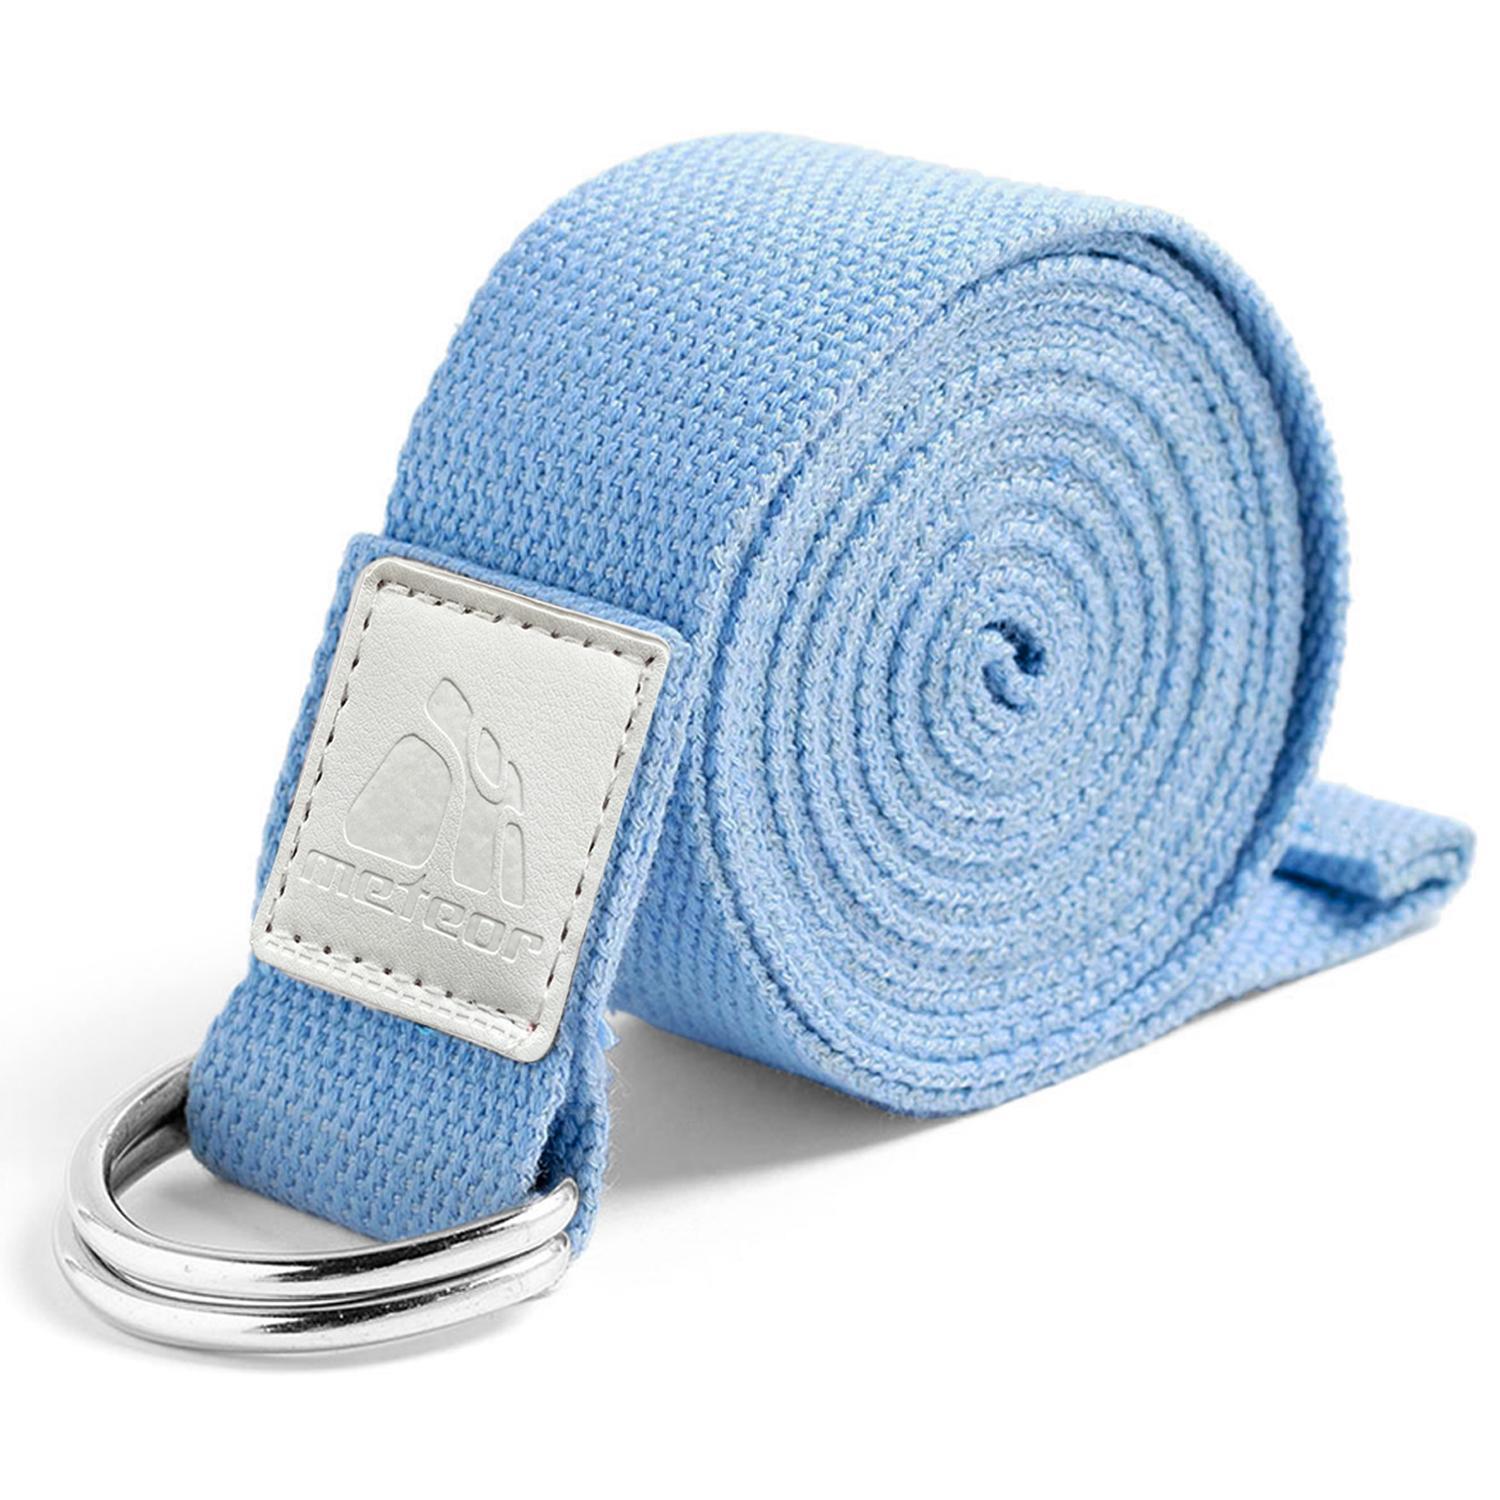 METEOR Essential Yoga Straps - Yoga Strap Belts,Yoga Belts,Strap Belts,Stretching Belts,Yoga Bands,Pilates Bands,Stretch Bands,Posture Straps - Blue